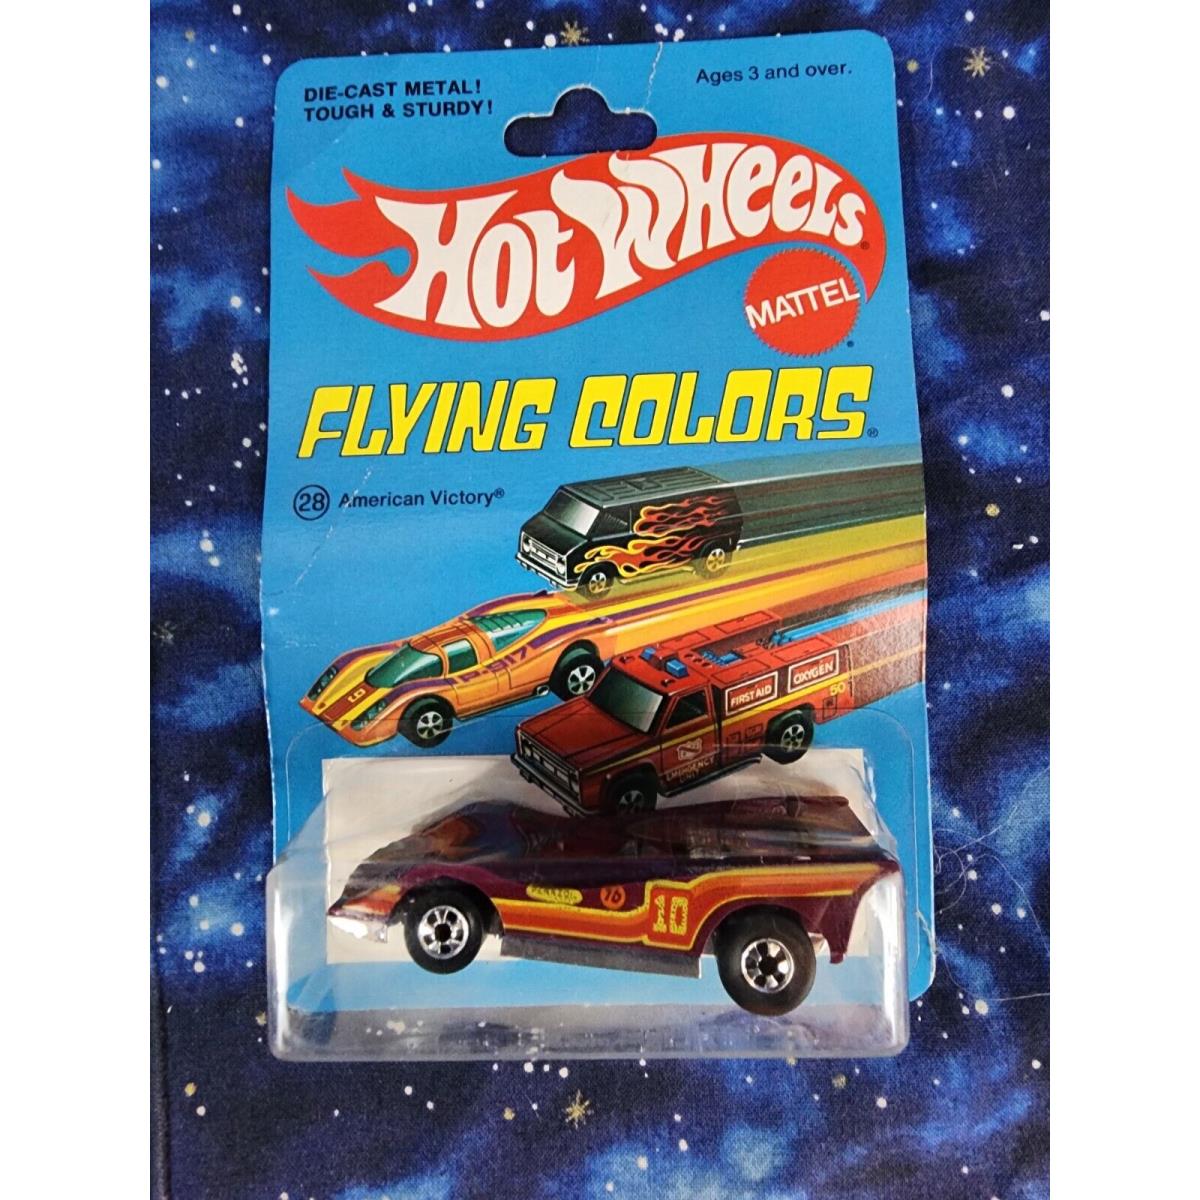 Vintage 1975 Mattel Flying Colors Hot Wheels American Victory HK Moc